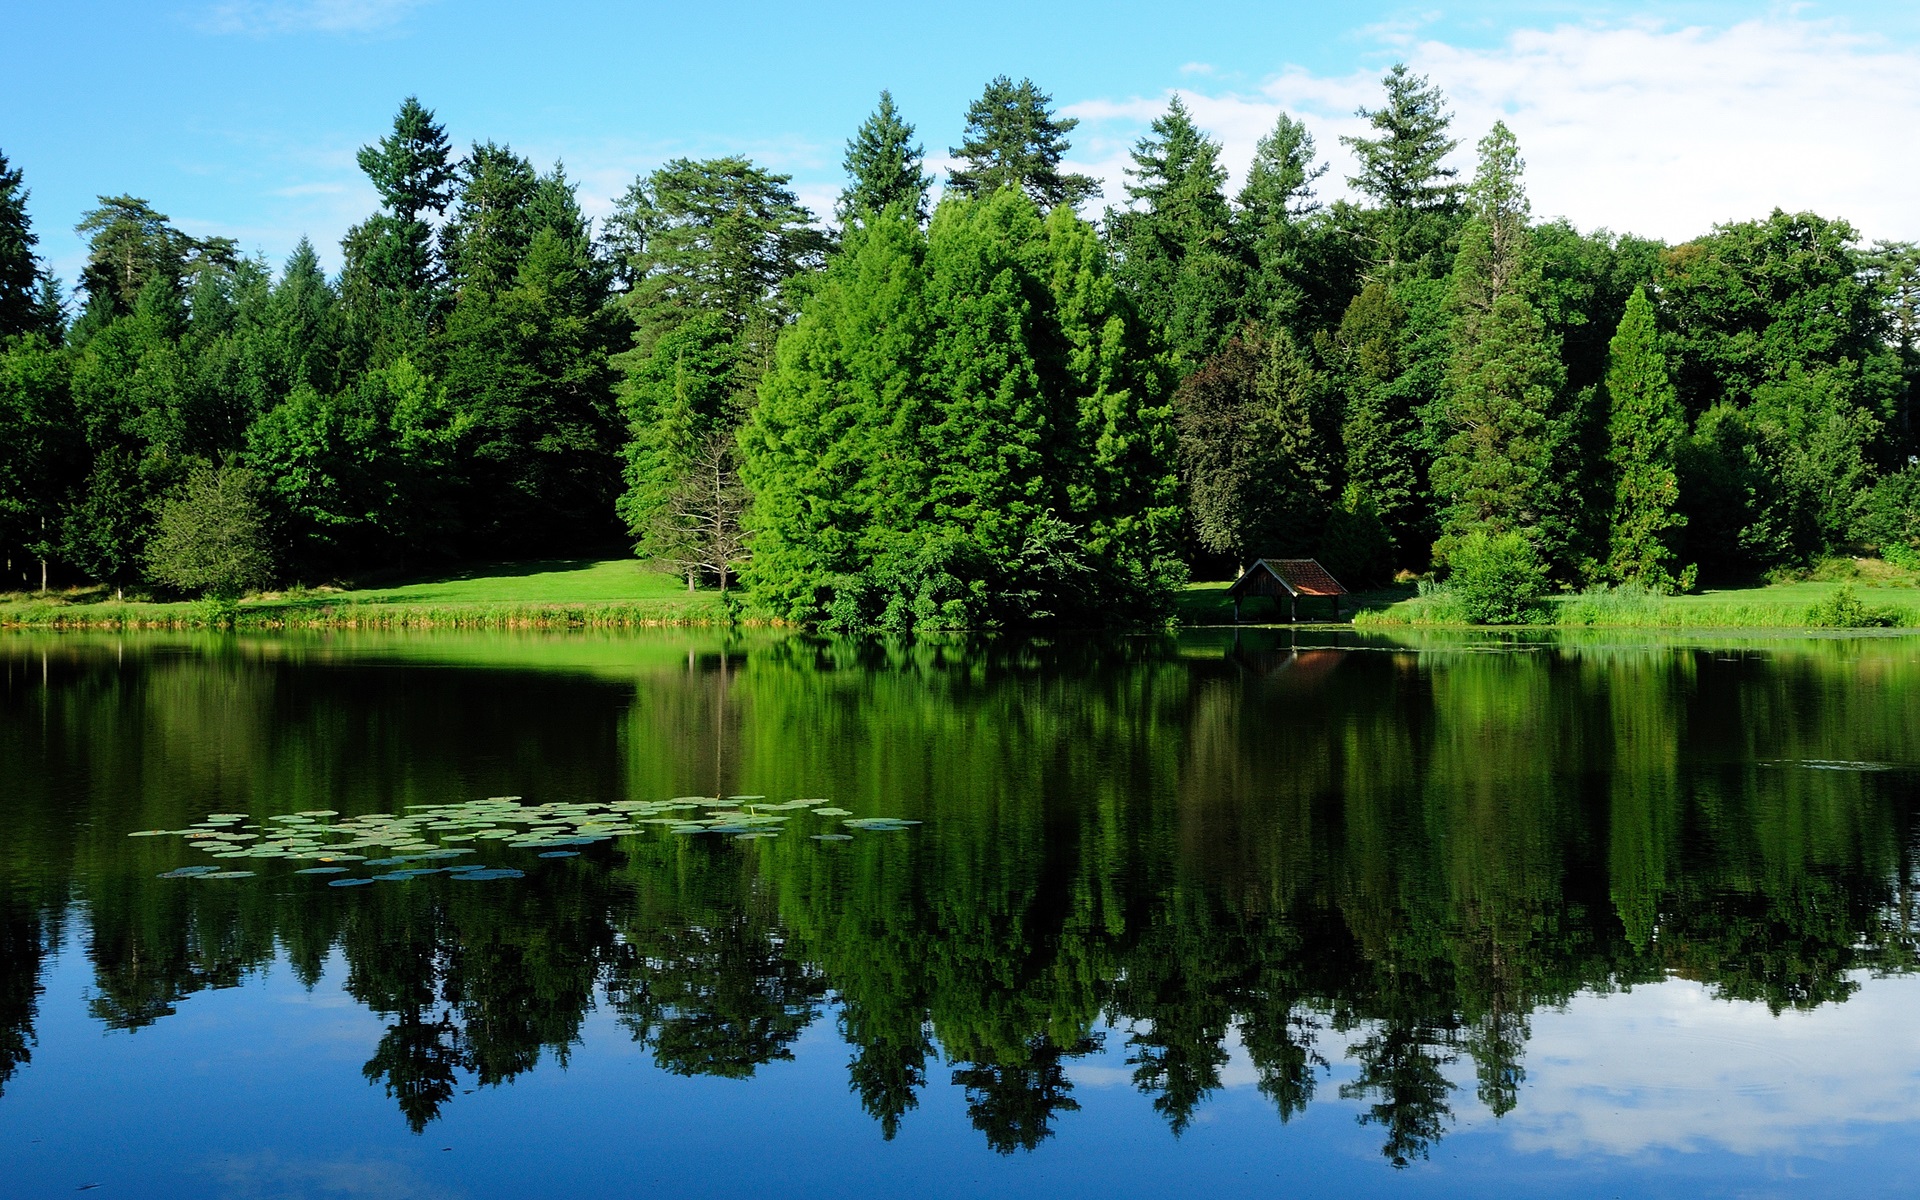 France, nature landscape, trees, greenery, lake, water reflection